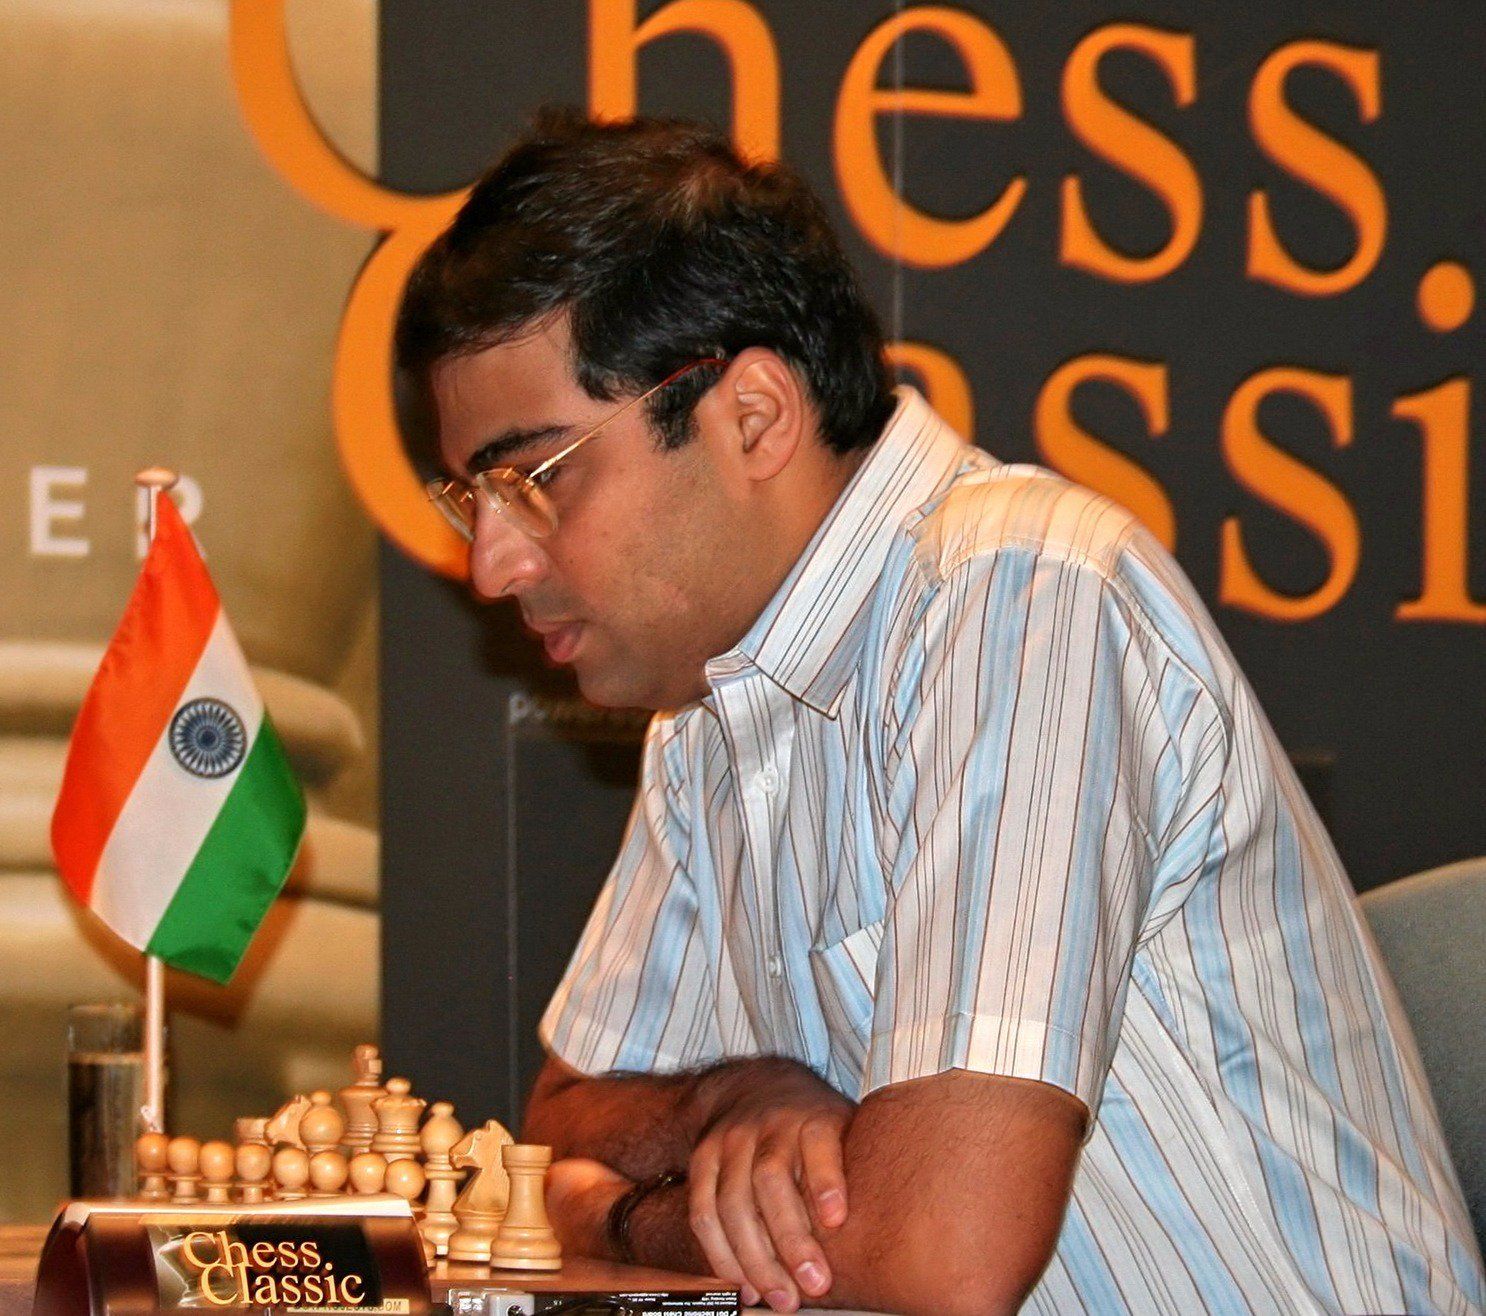 Chess grandmaster Vishwananthan Anand returns after 3 months